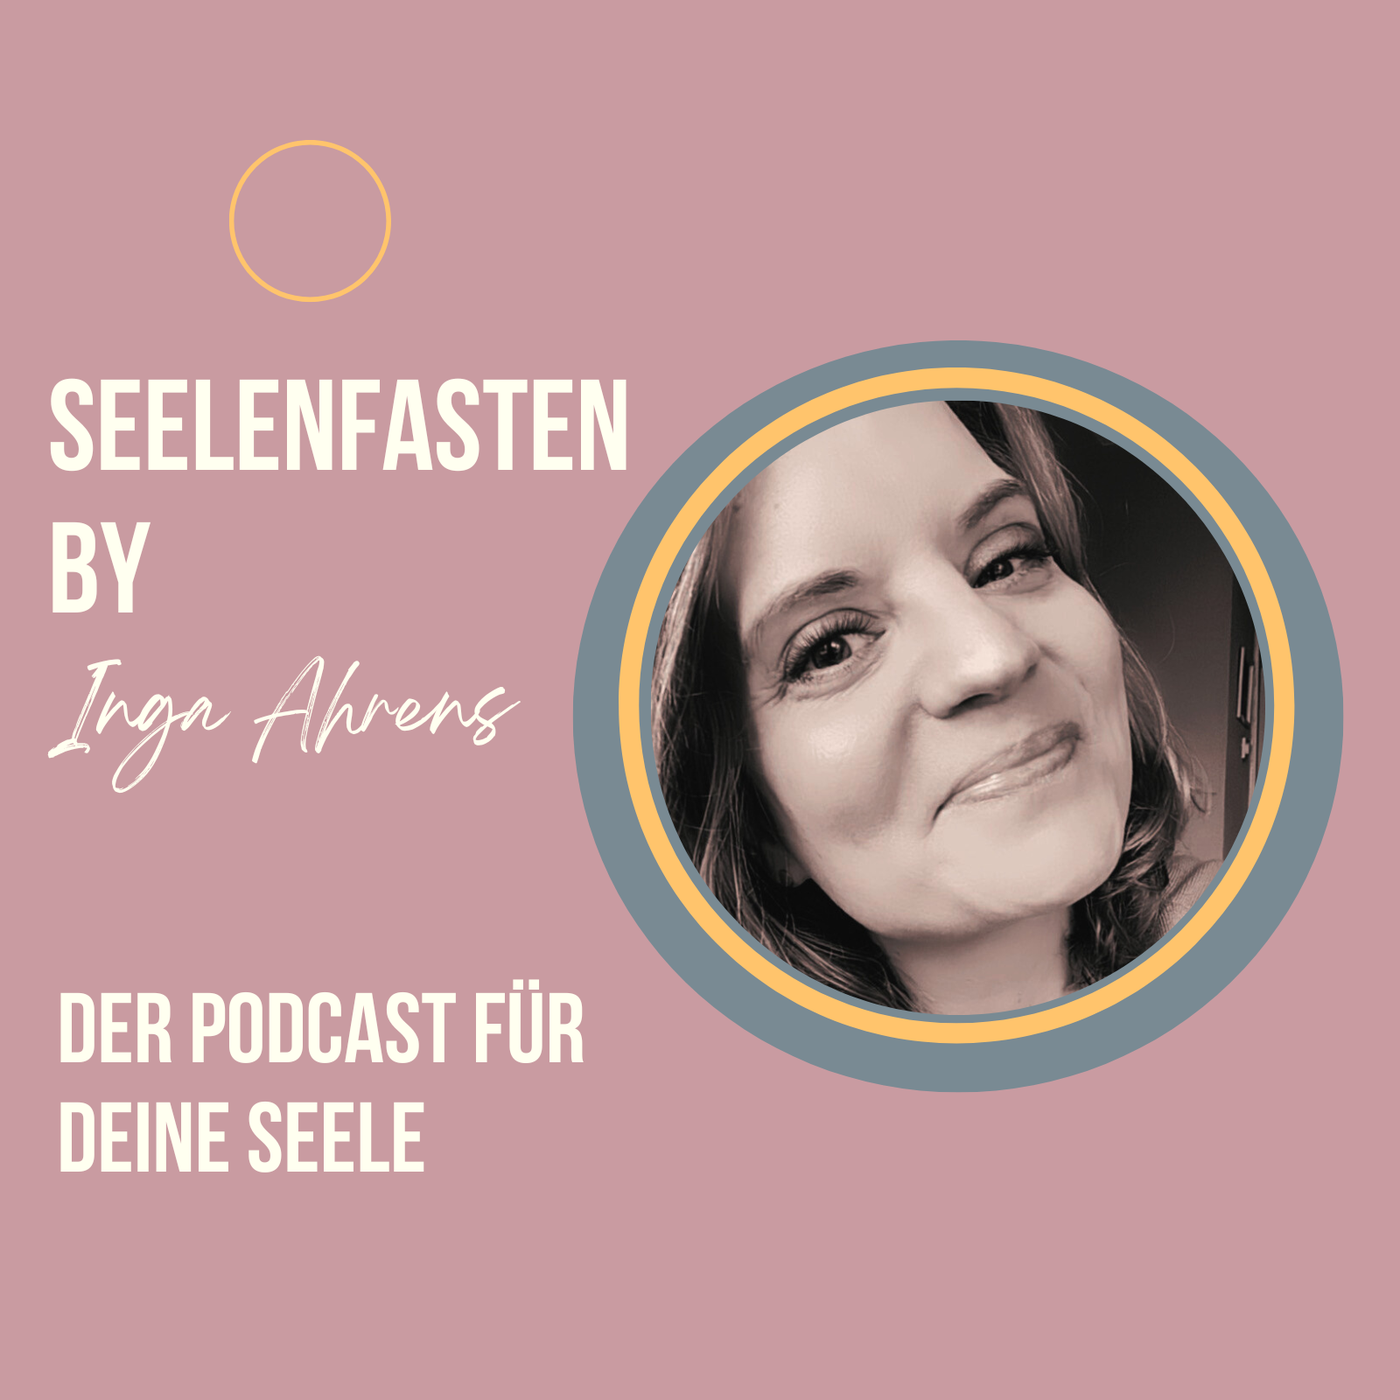 Der Seelenfasten Podcast by Inga Ahrens – Inga Ahrens